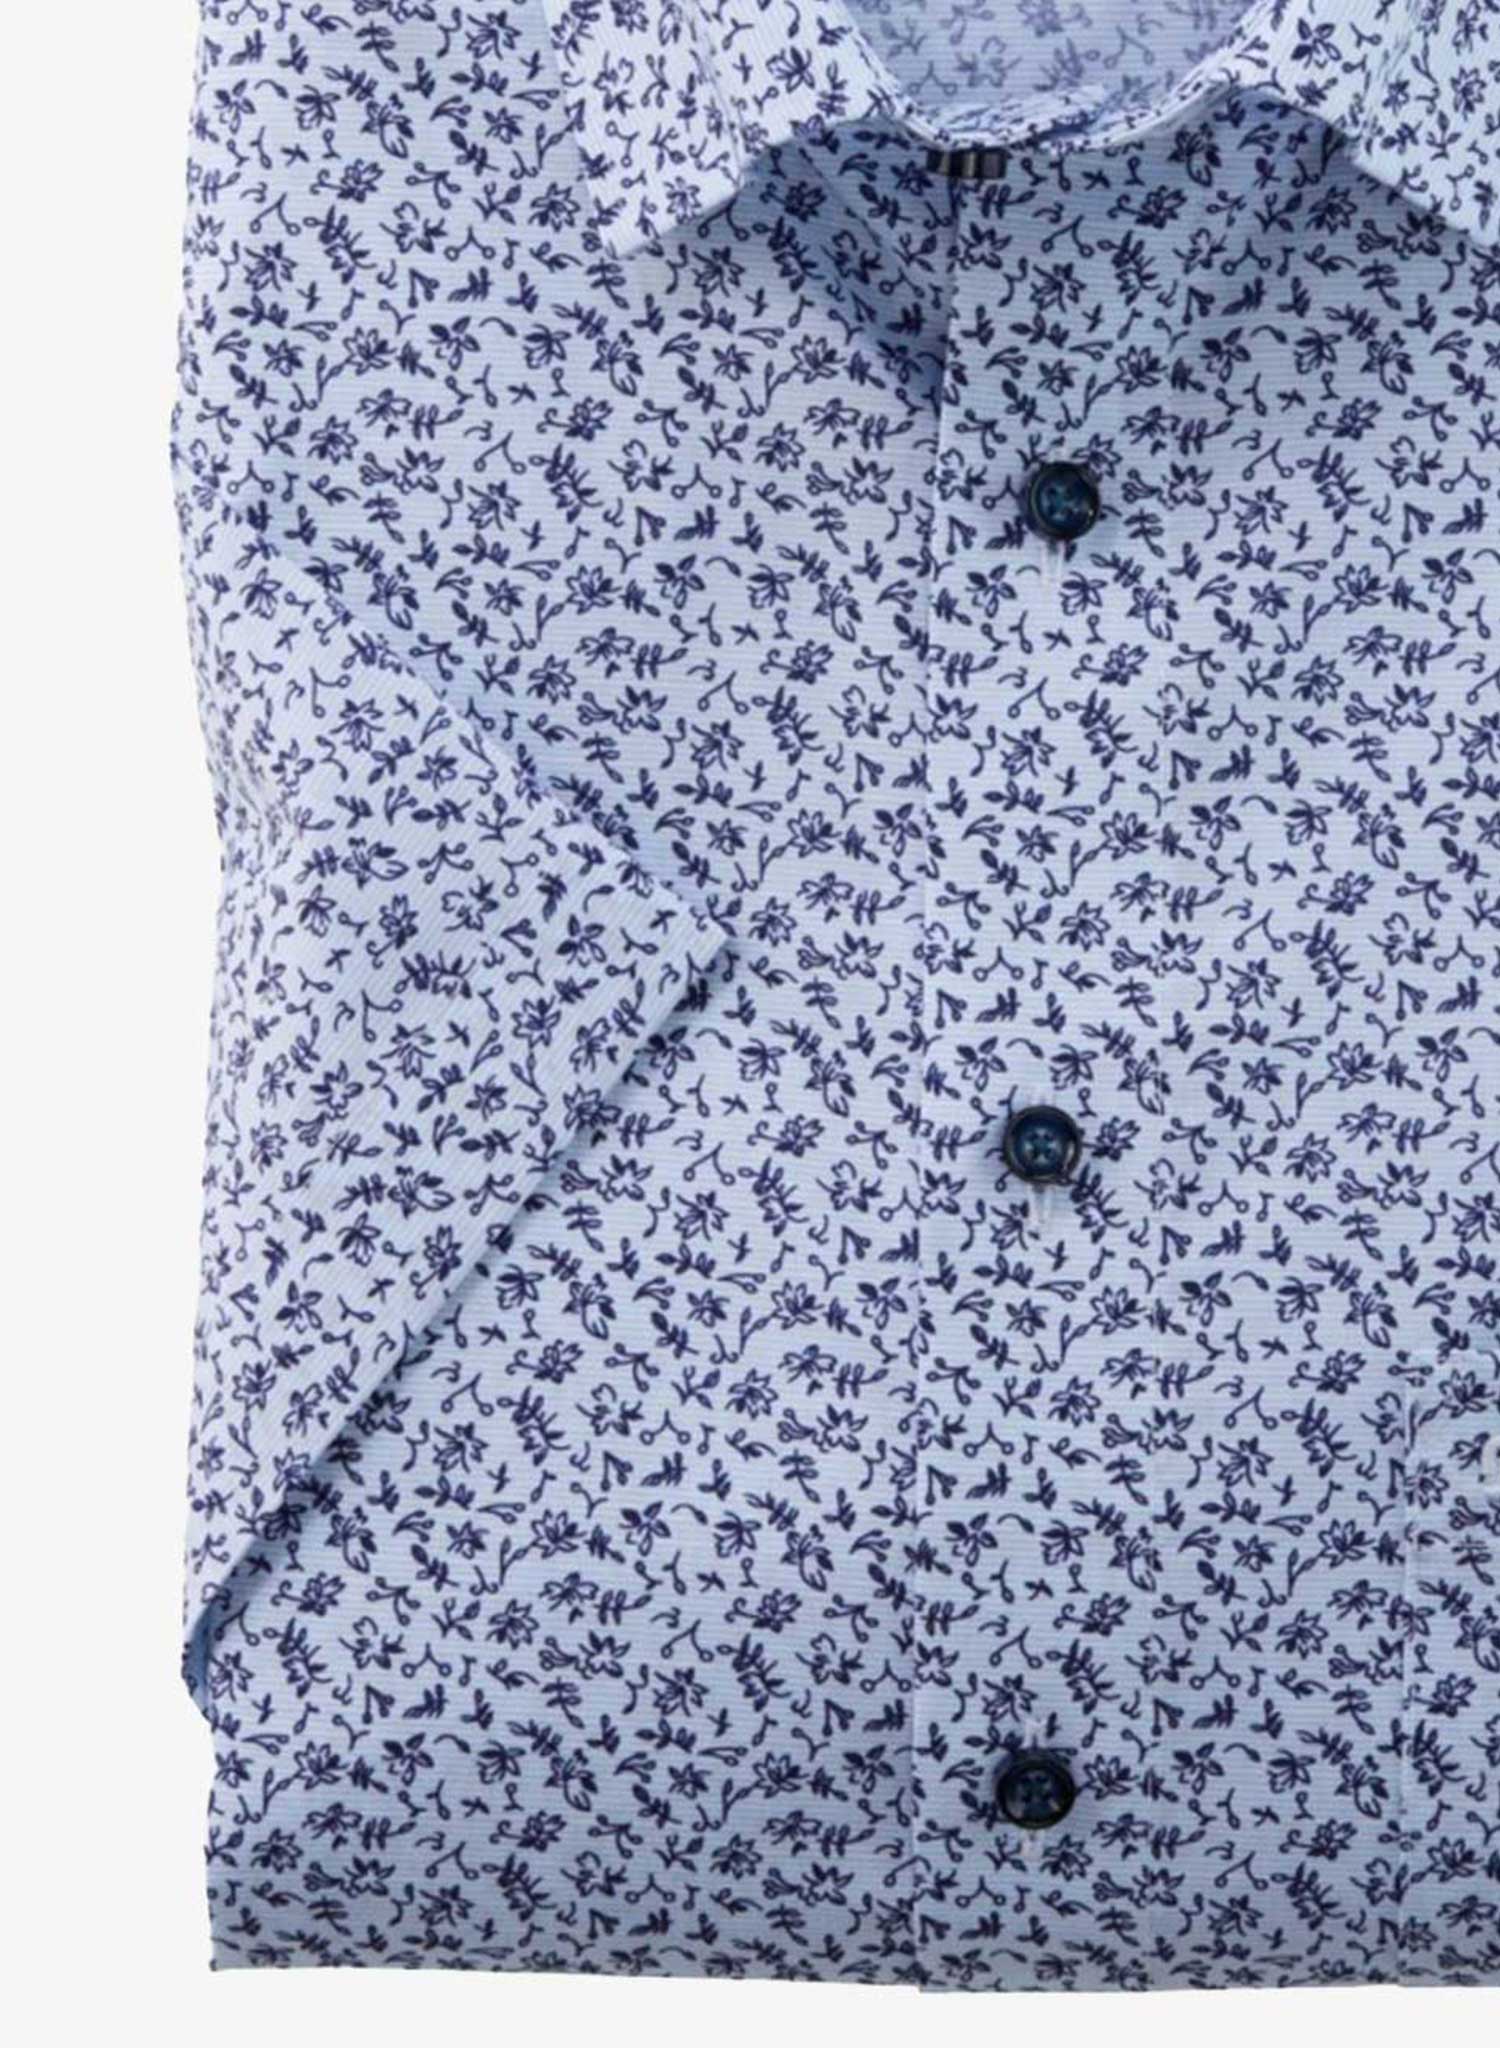 Olymp Blue Short Sleeve Shirt Floral Print